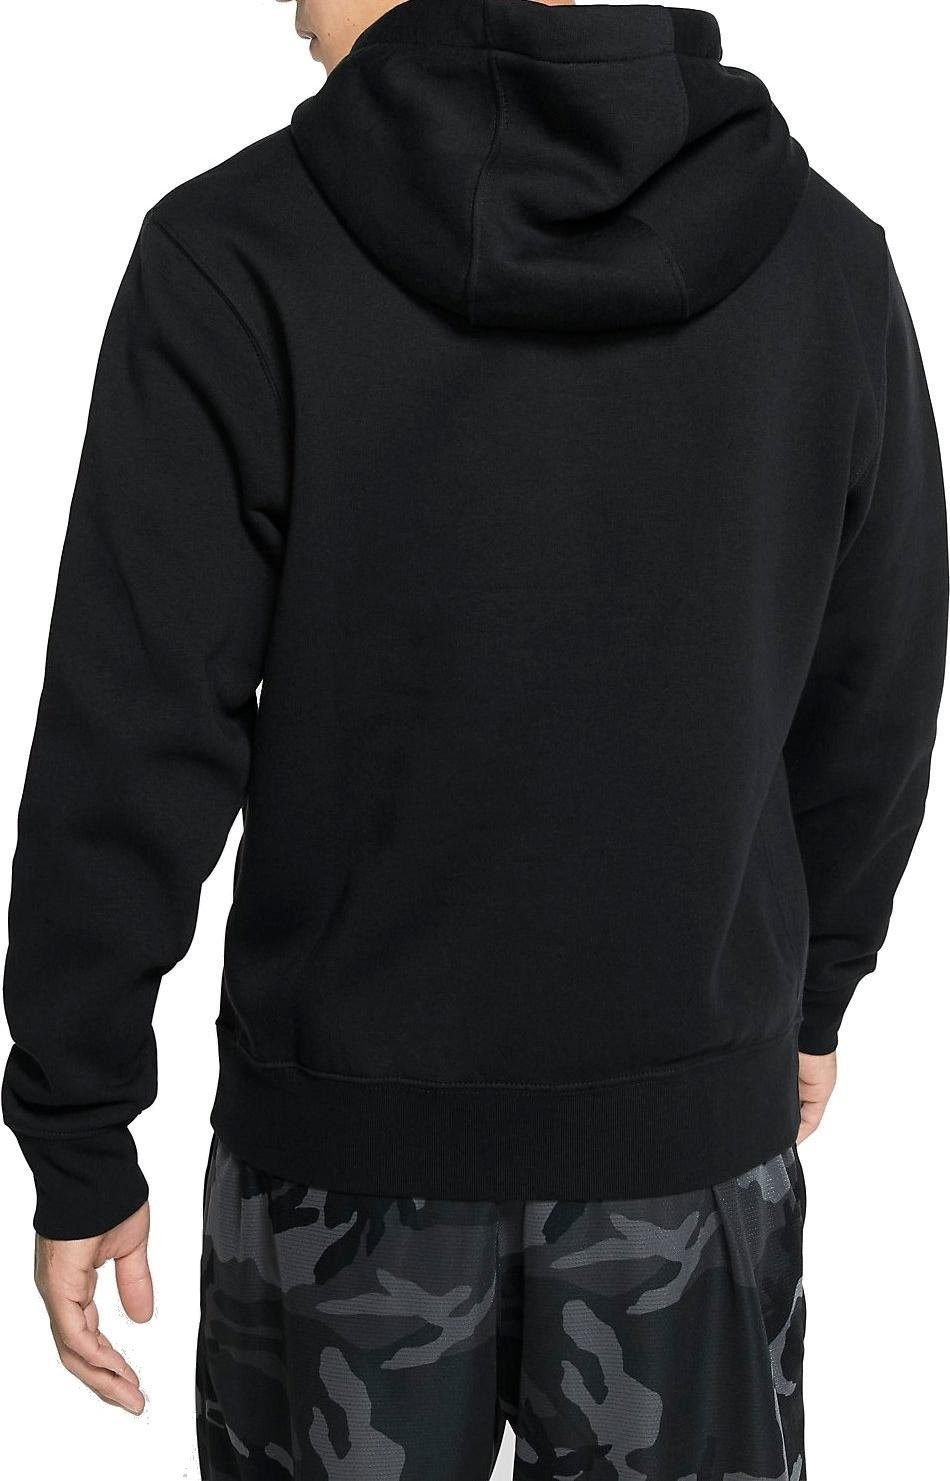 Buy Nike Club Fleece black (BV2973) from £28.57 (Today) – Best Deals on ...